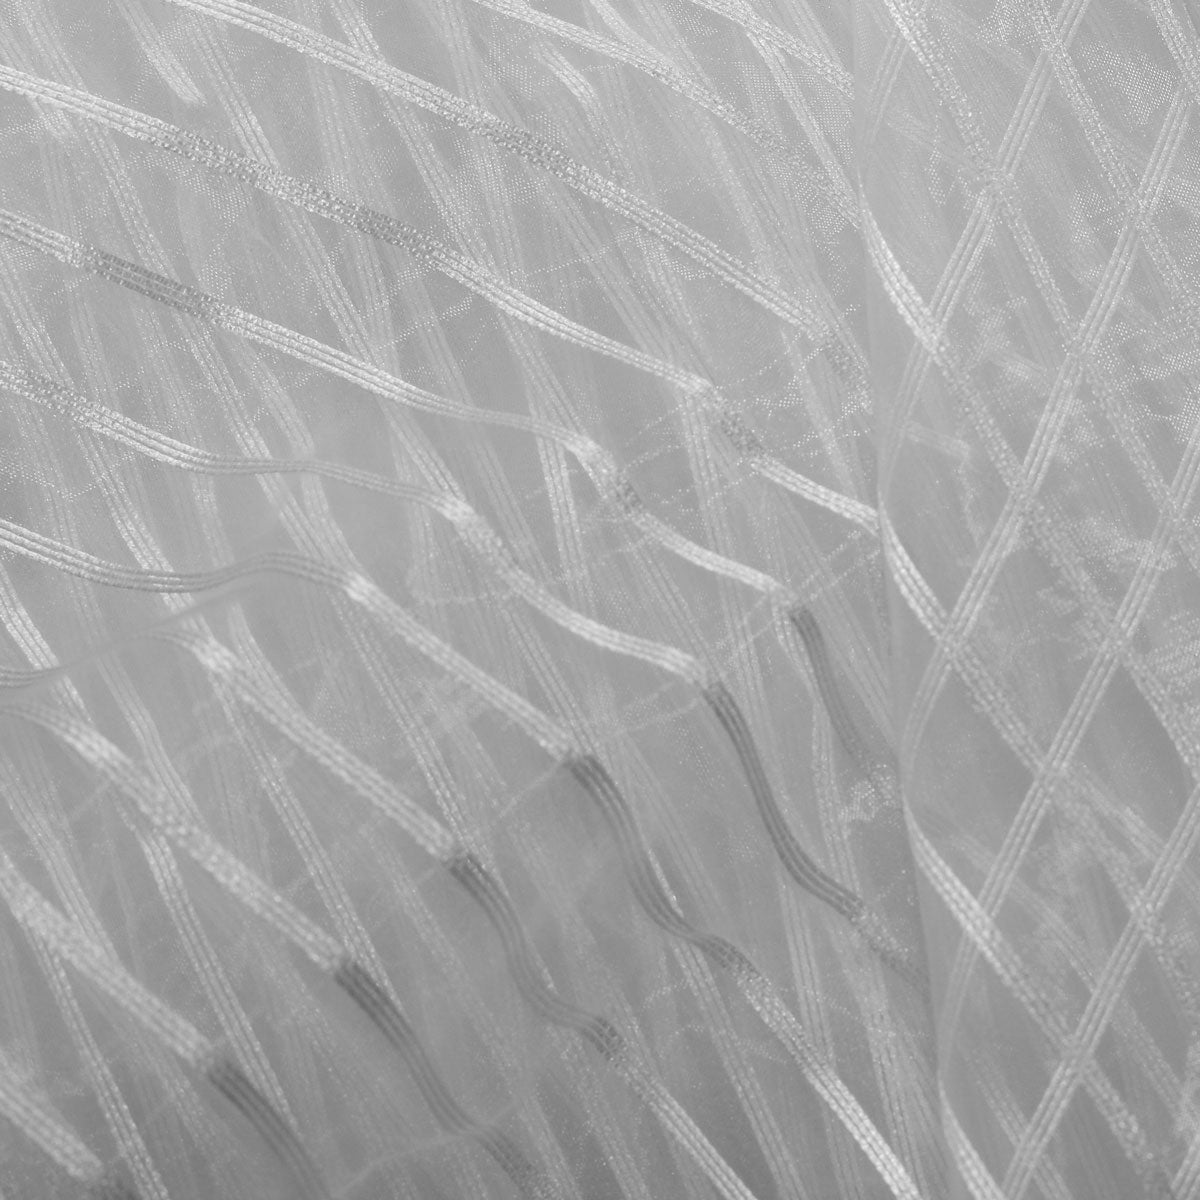 White Striped Able Sheer Drapery Home Decor Fabric - Fashion Fabrics Los Angeles 